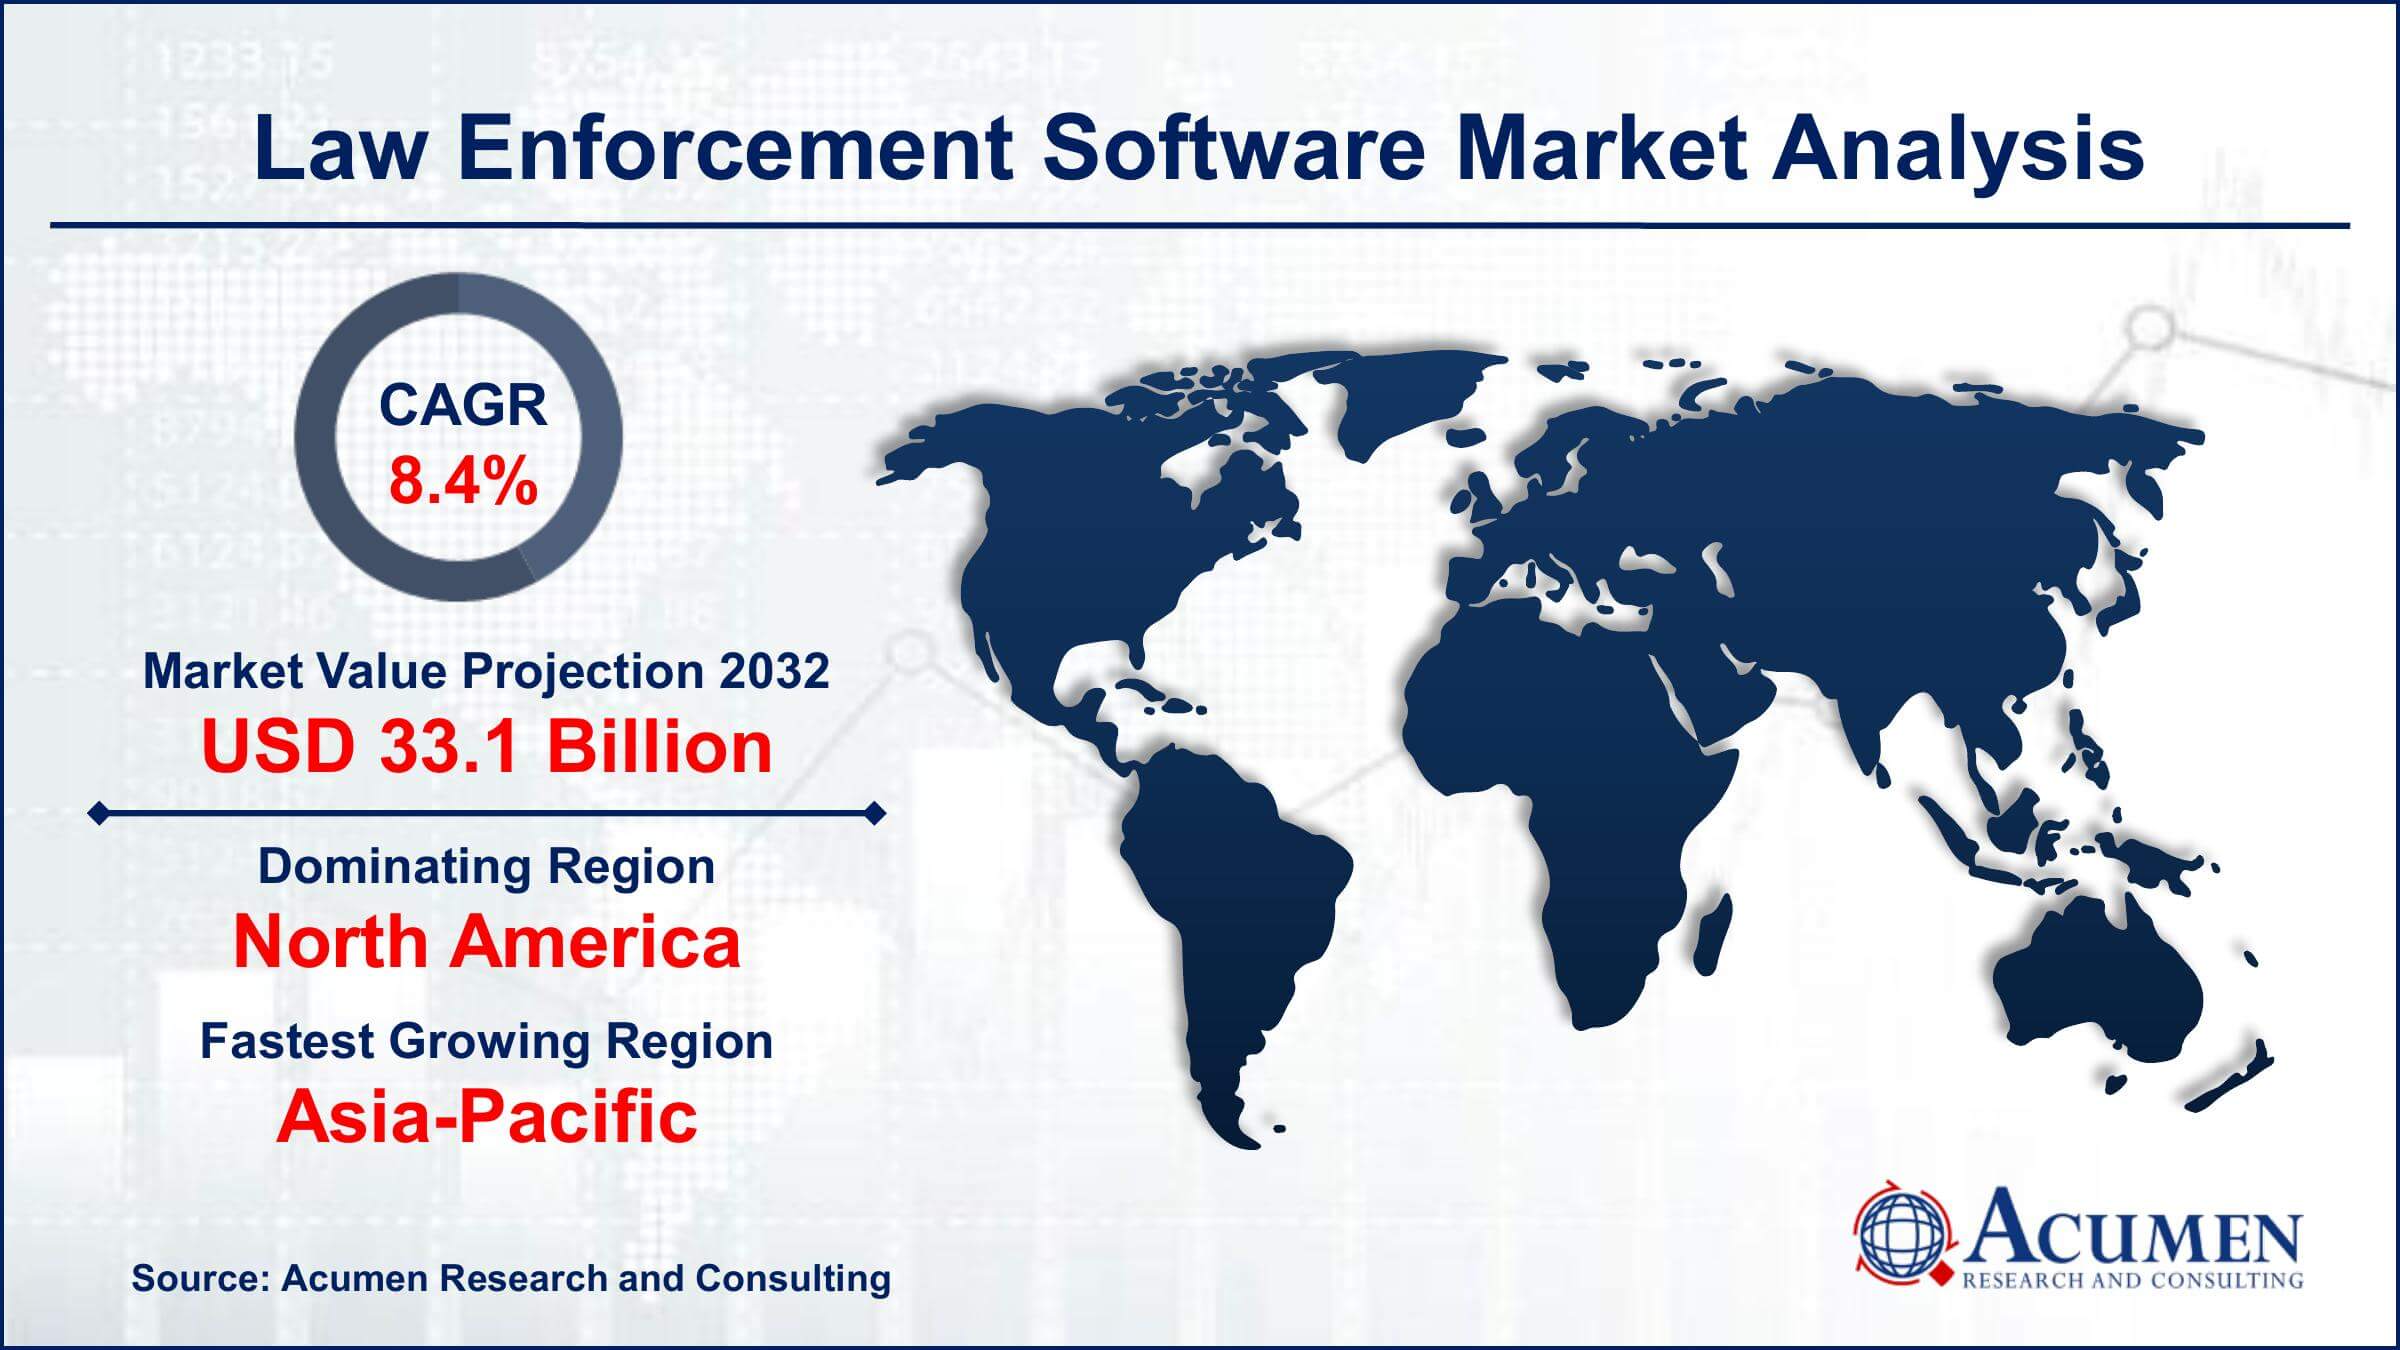 Global Law Enforcement Software Market Trends